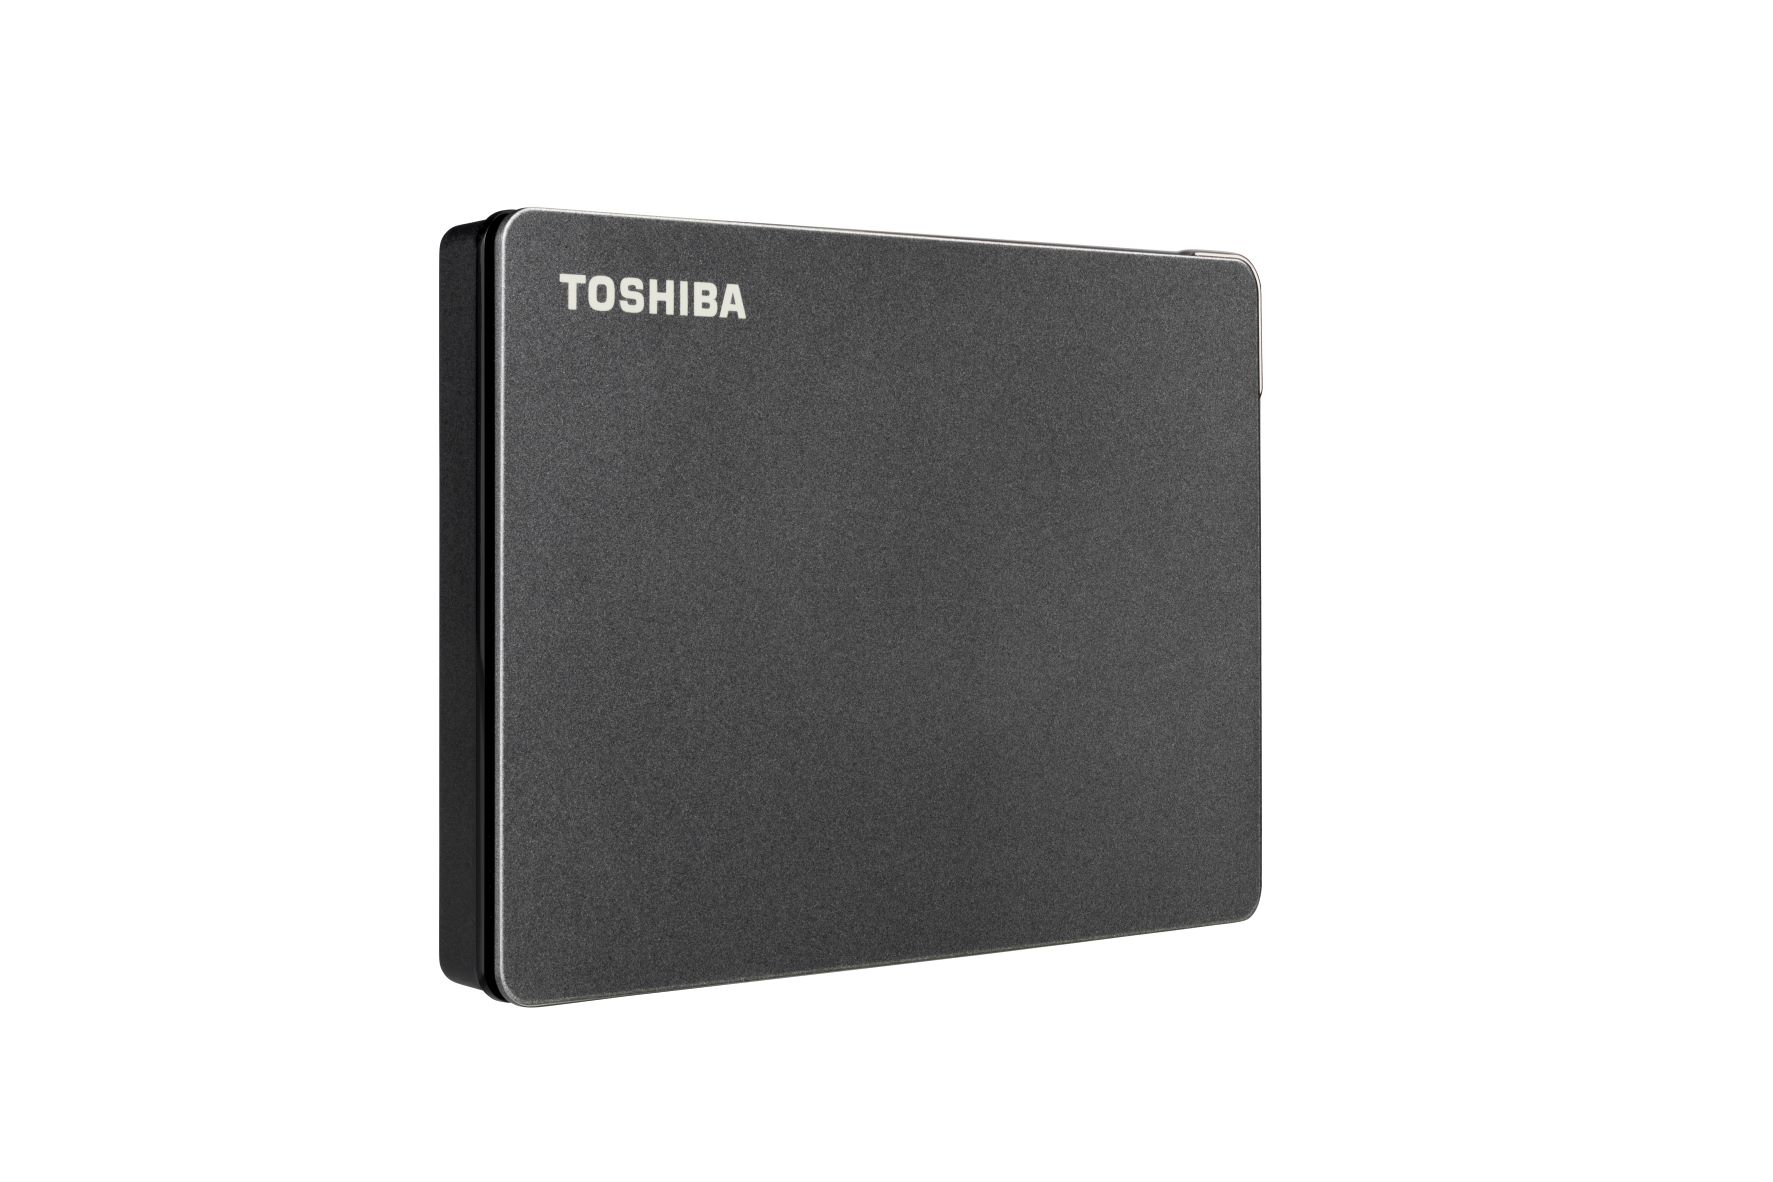 DISCO DURO EXTERNO TOSHIBA 4TB HDTX140XK3CA USB 3.0 CANVIO GAMING NEG